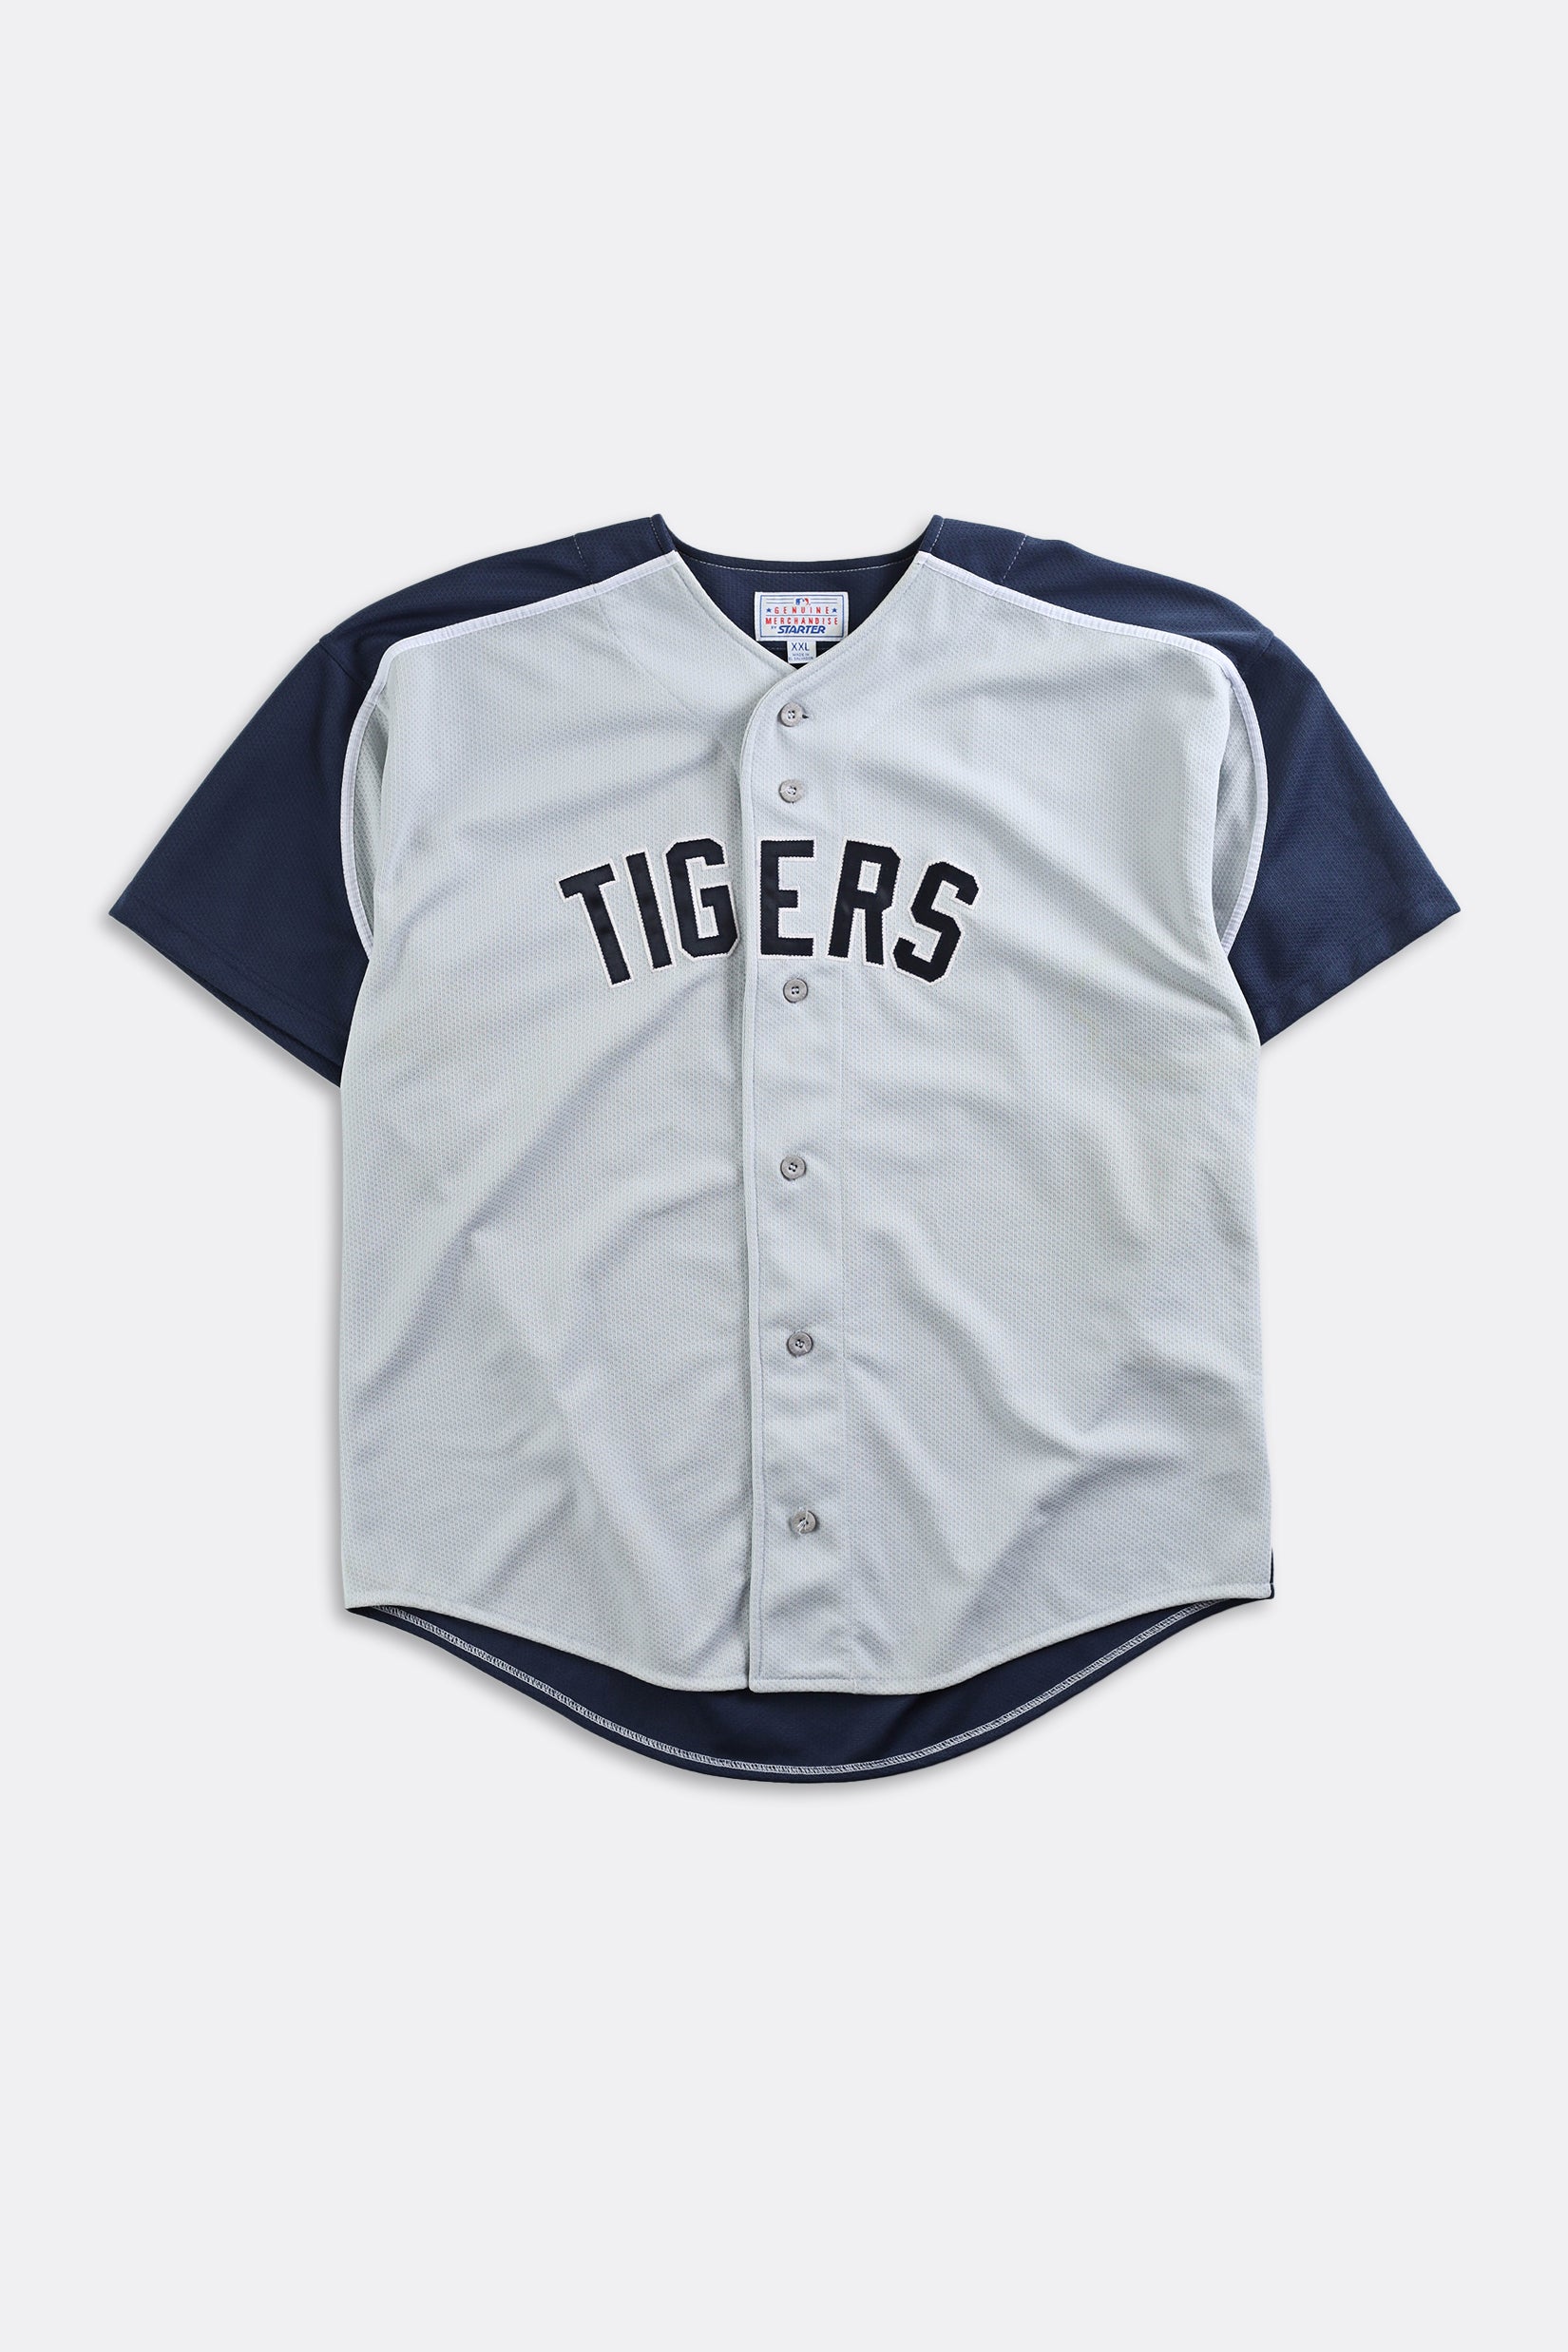 MLB Genuine Merchandise Detroit Tigers Jersey Size Large Mens Blue